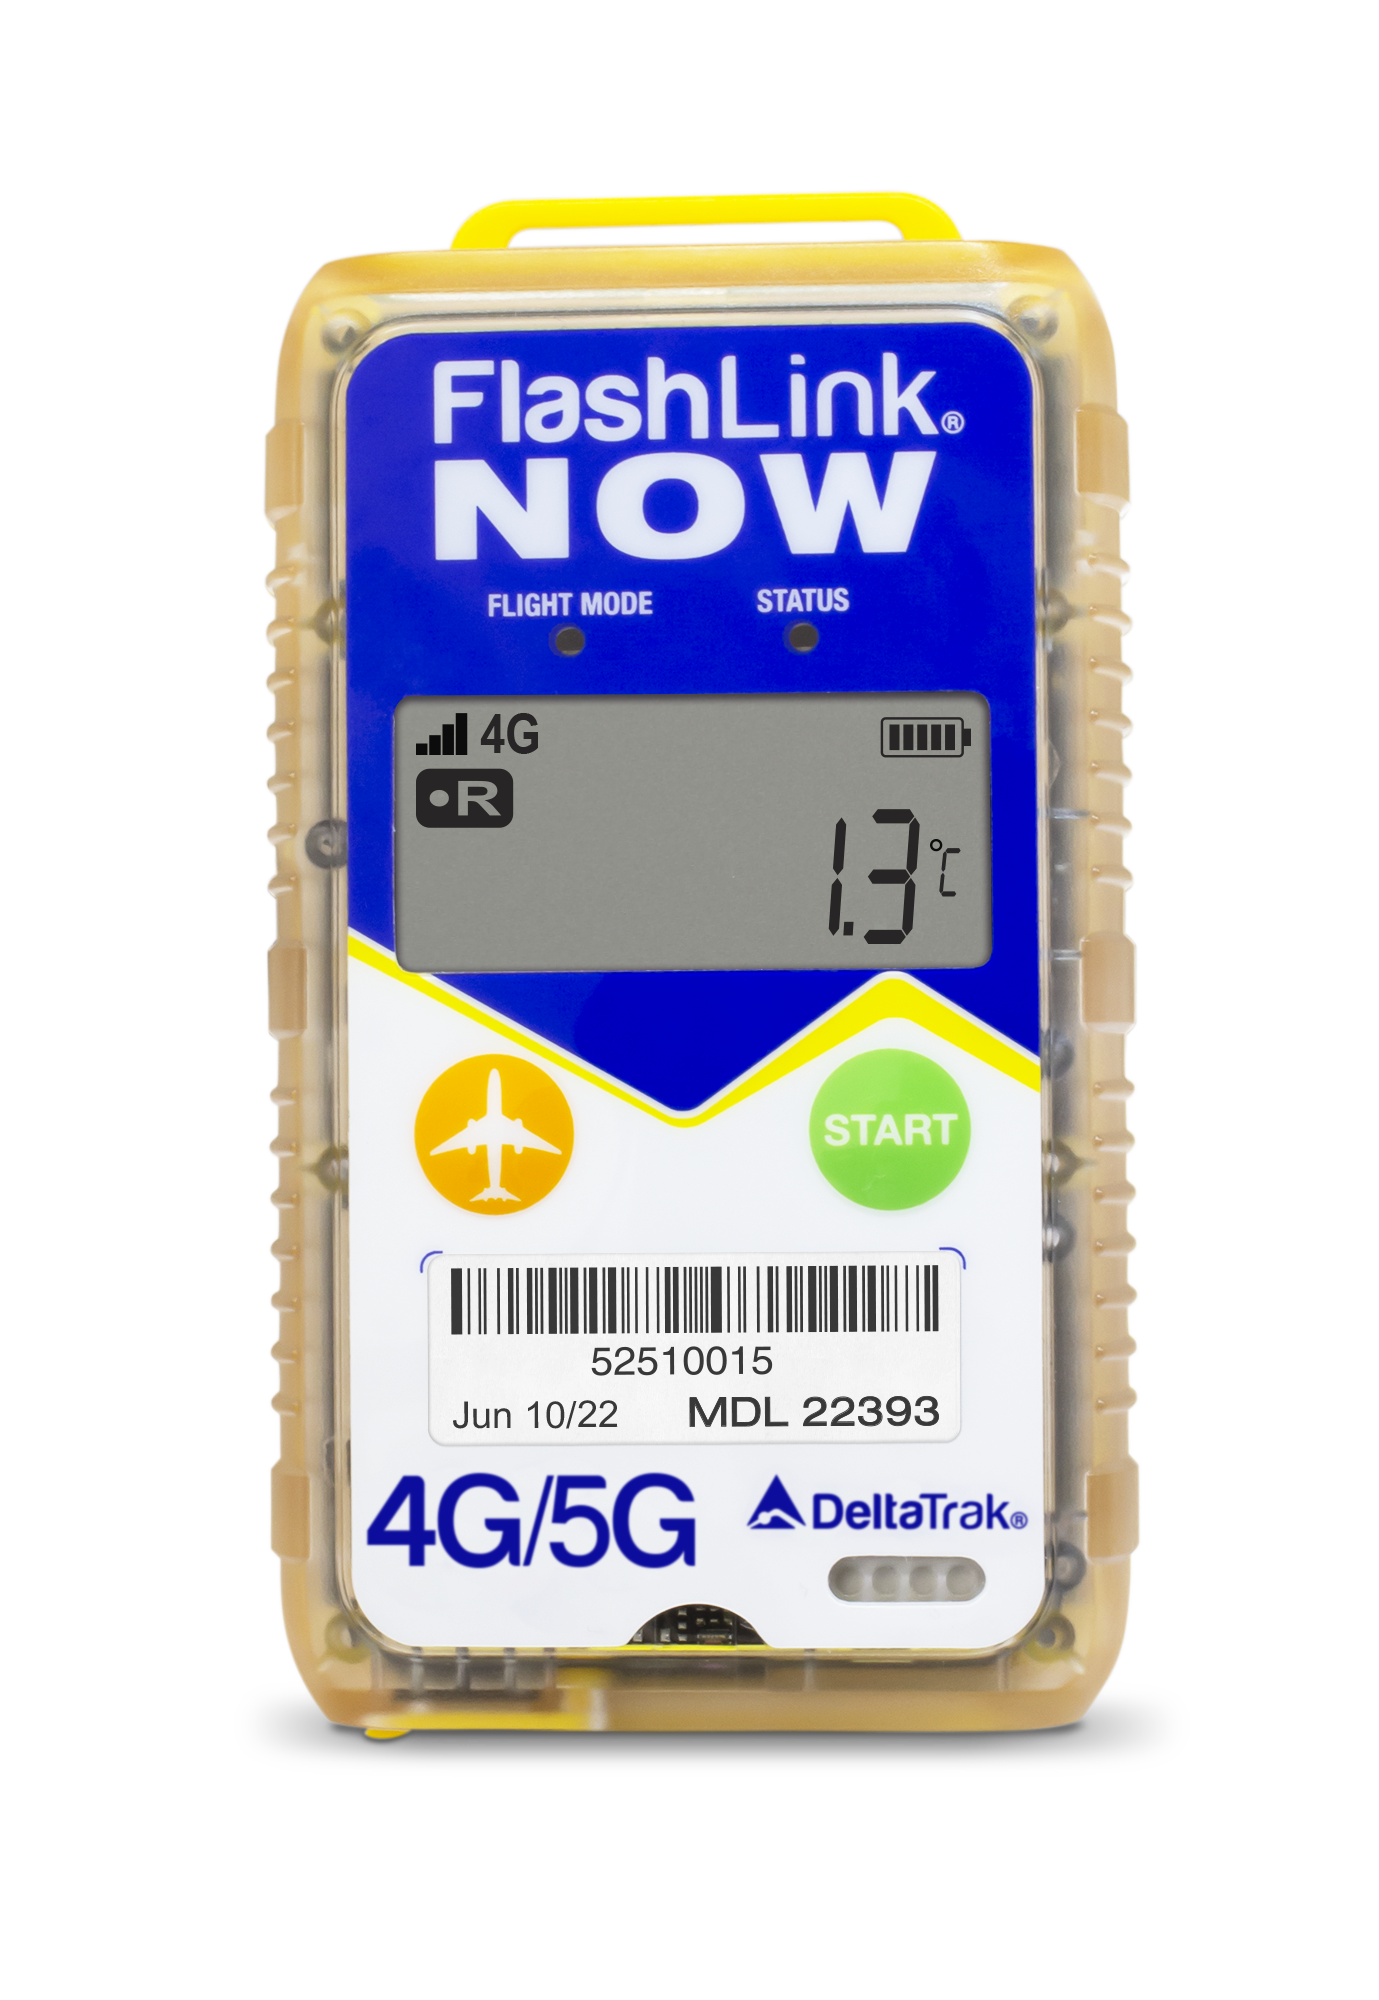 FlashLink® NOW 4G/5G Real-Time In-Transit Logger, Model 22393